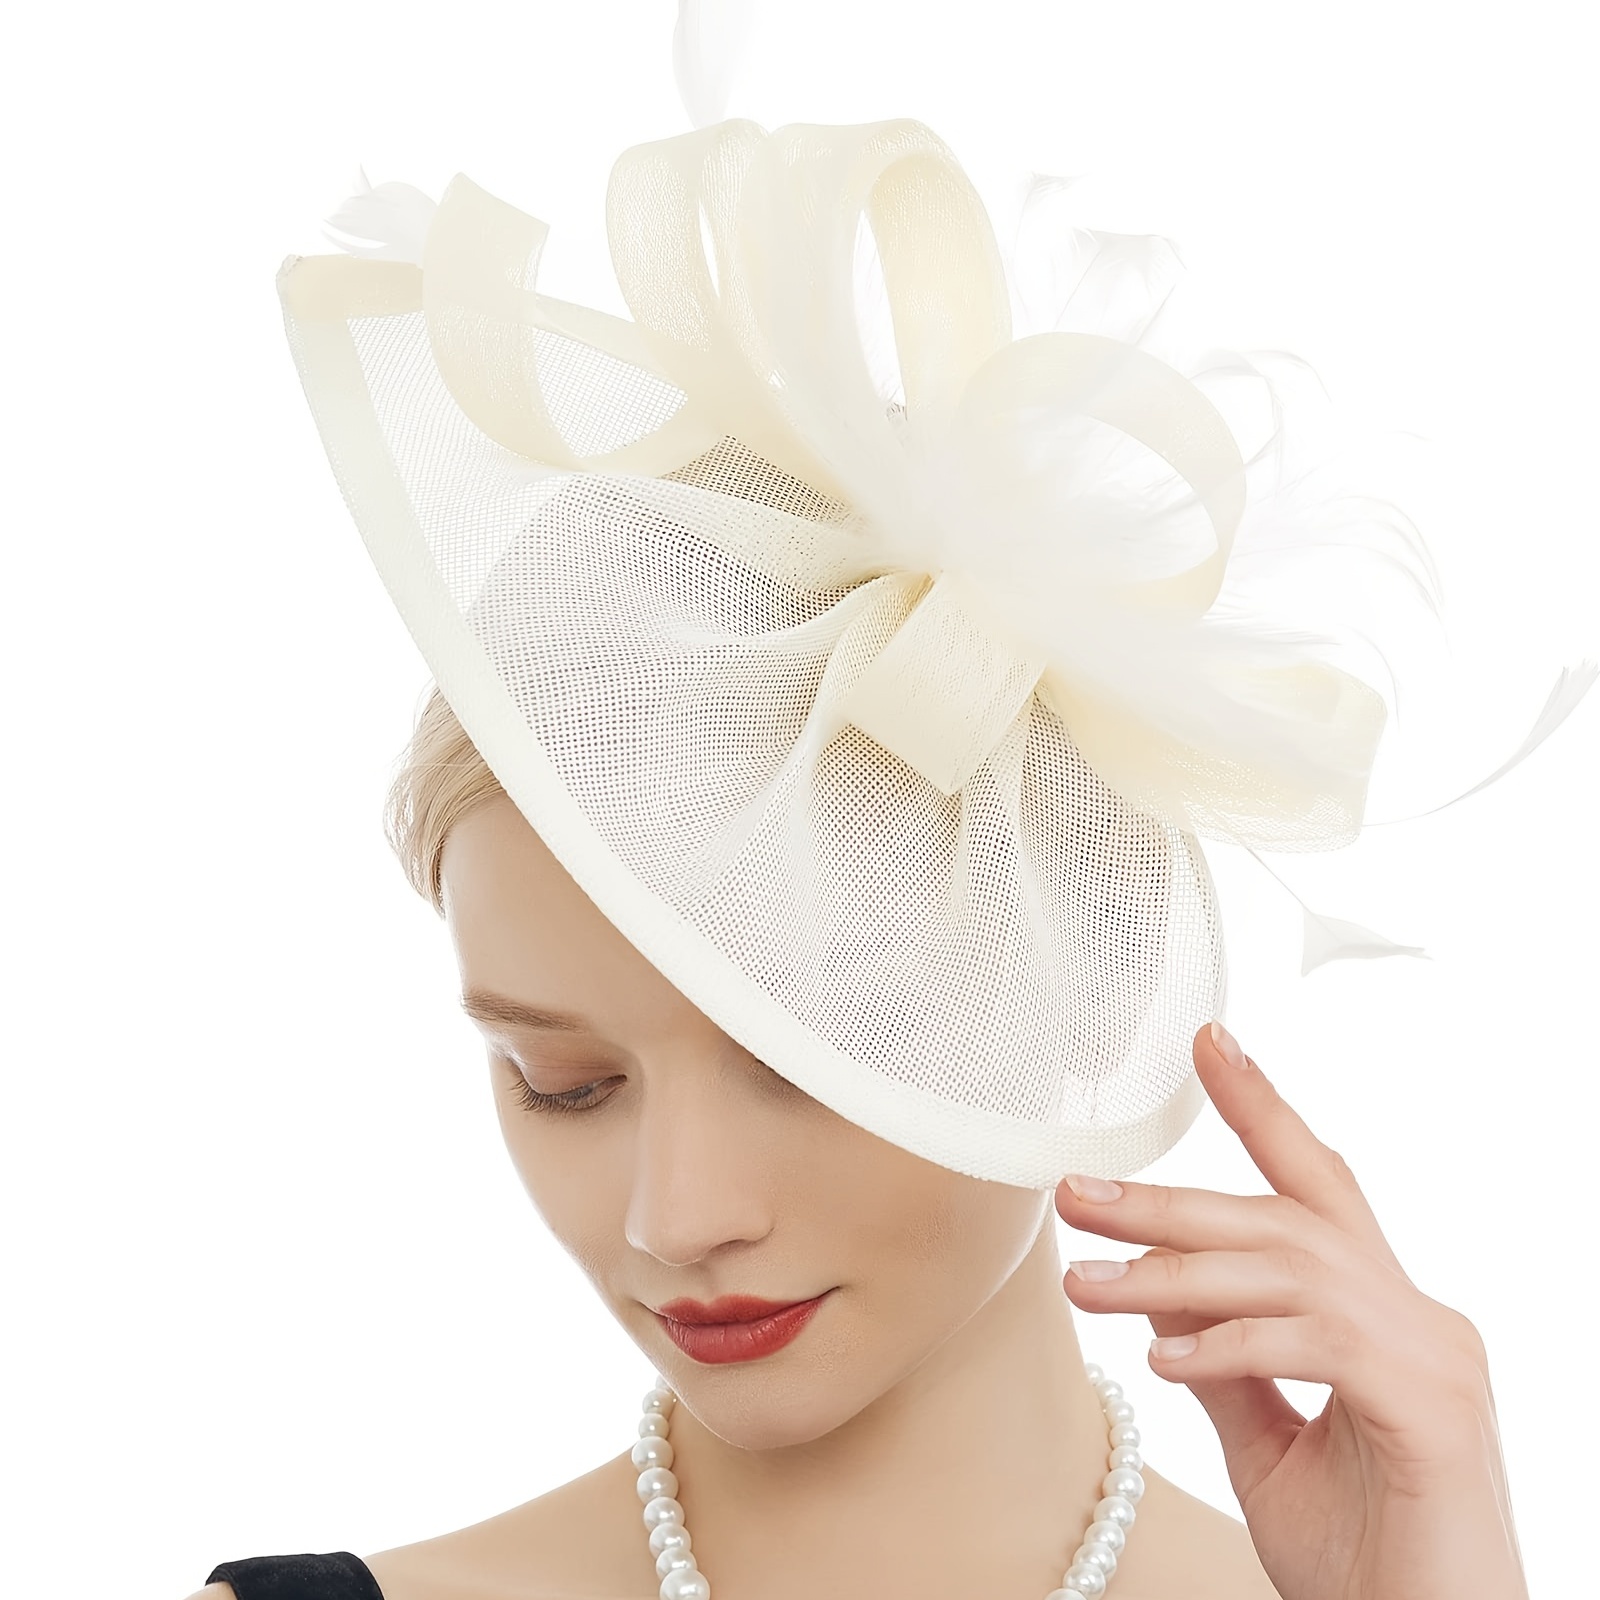  Fascinator Hats for Women, Women's Elegant Church